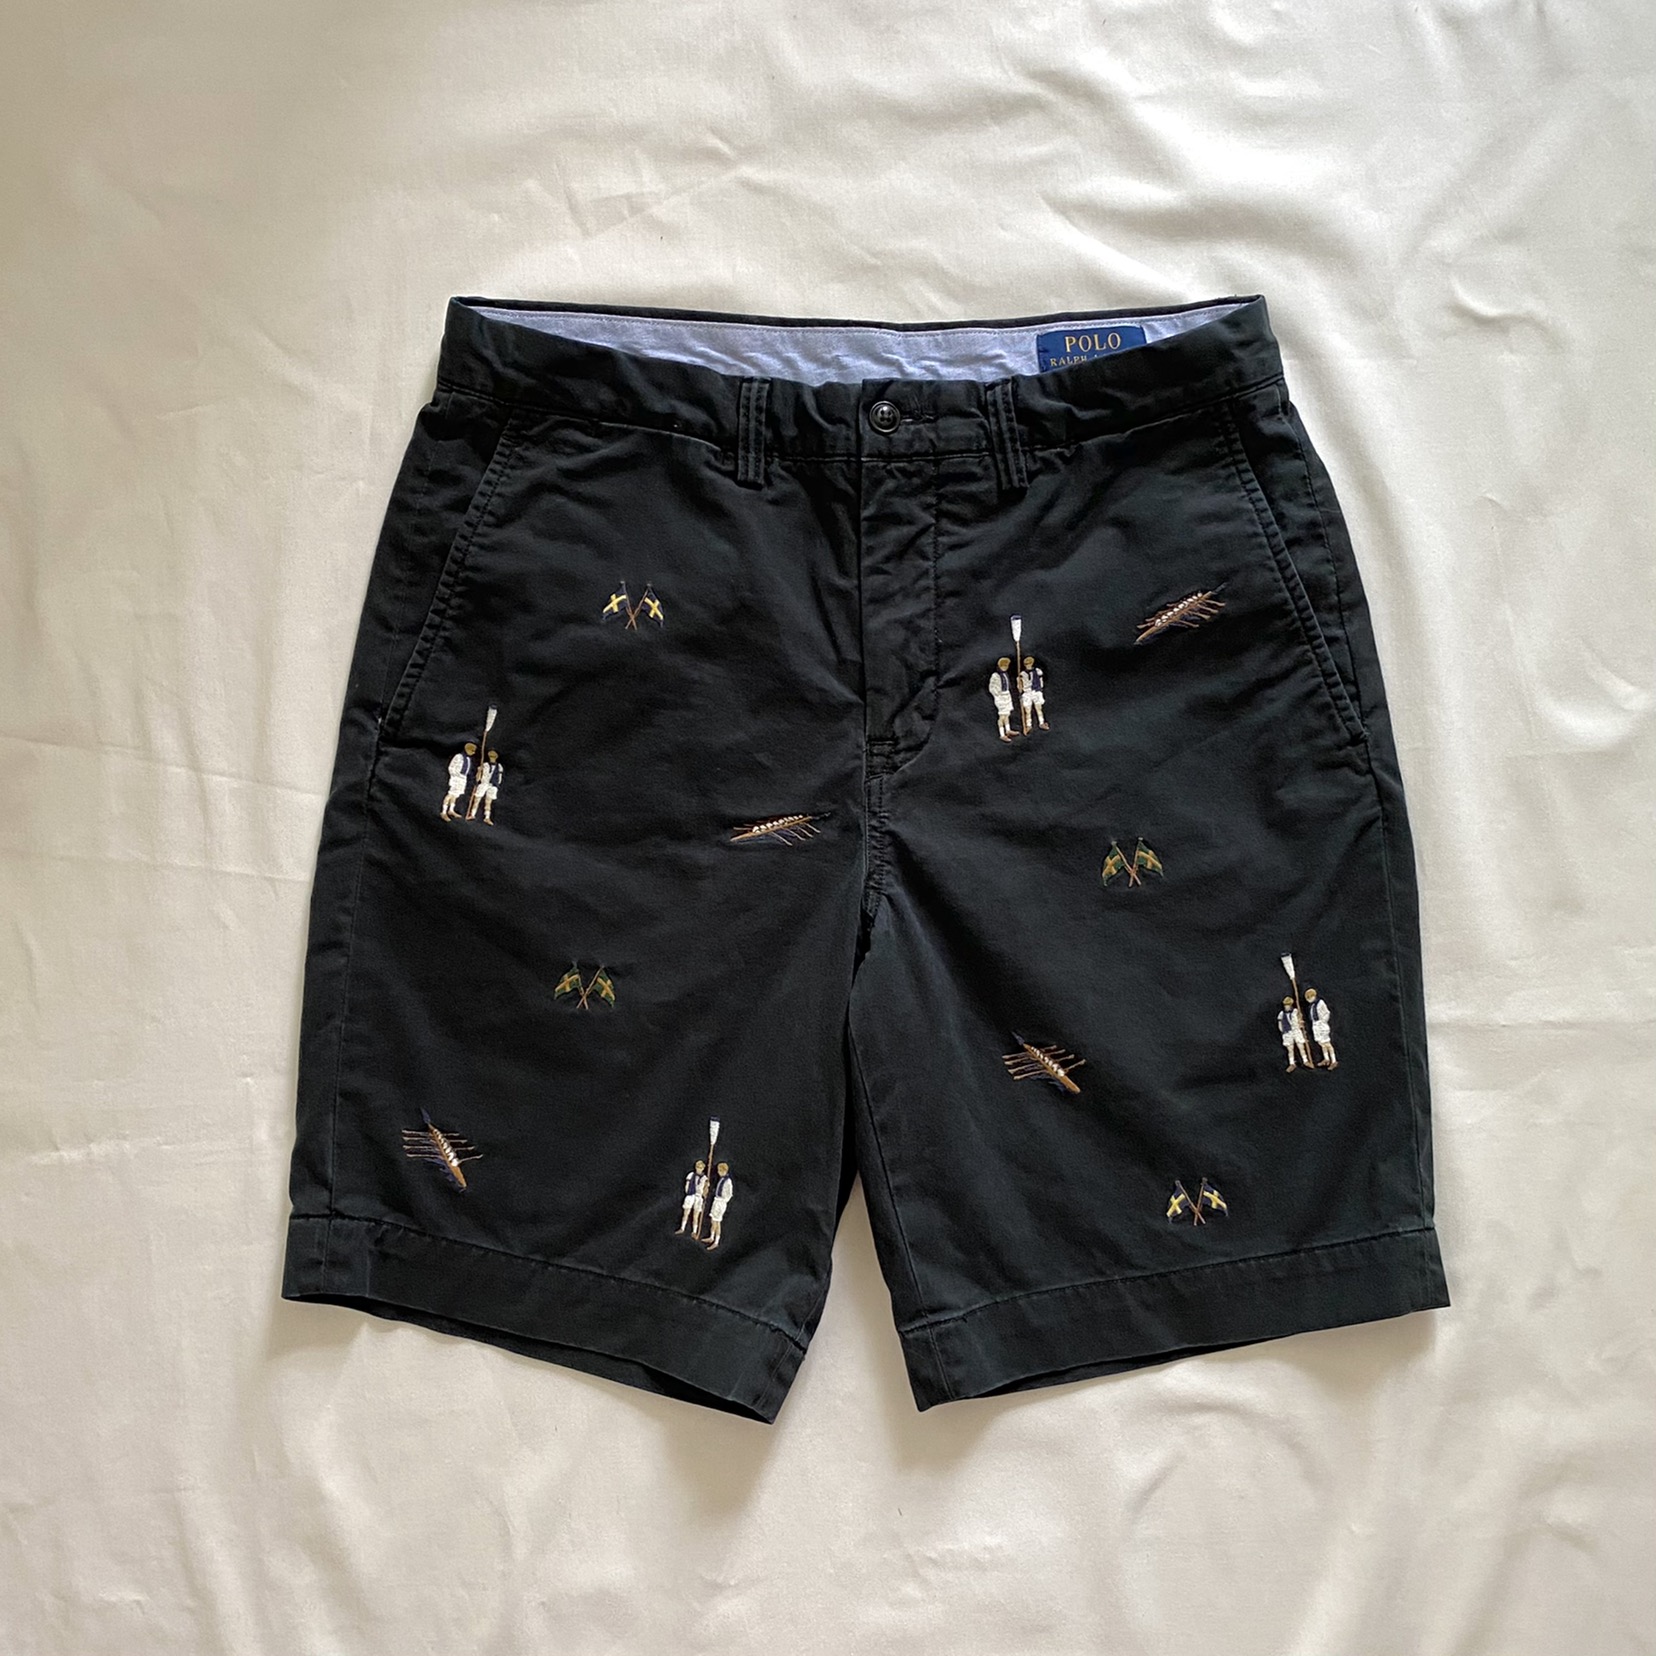 Polo Ralph Lauren Rowing Embroidered Shorts 30 - 체리피커